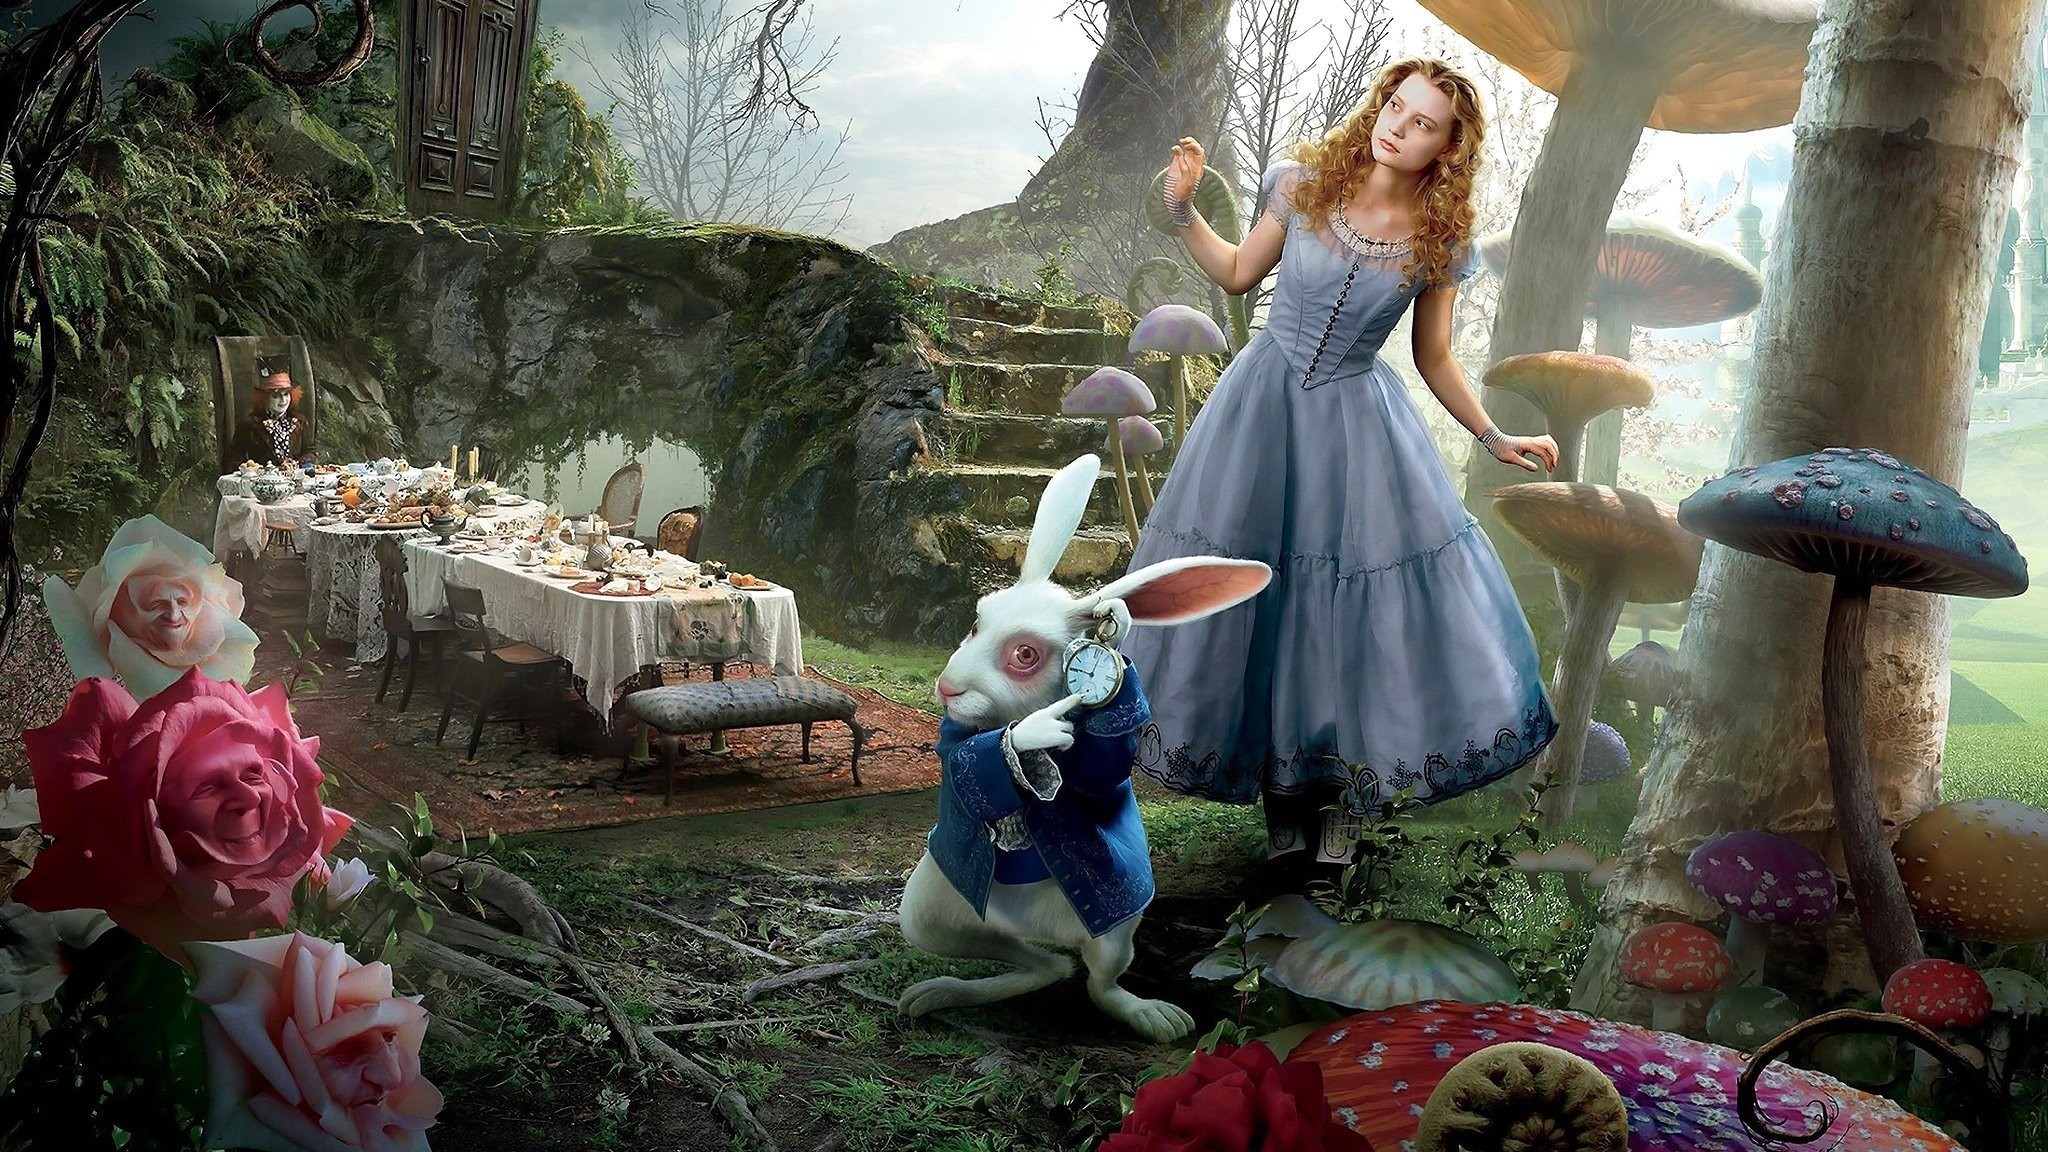 Алисы в Стране чудес" (или, как часто говорят, просто "Алиса в Ст...